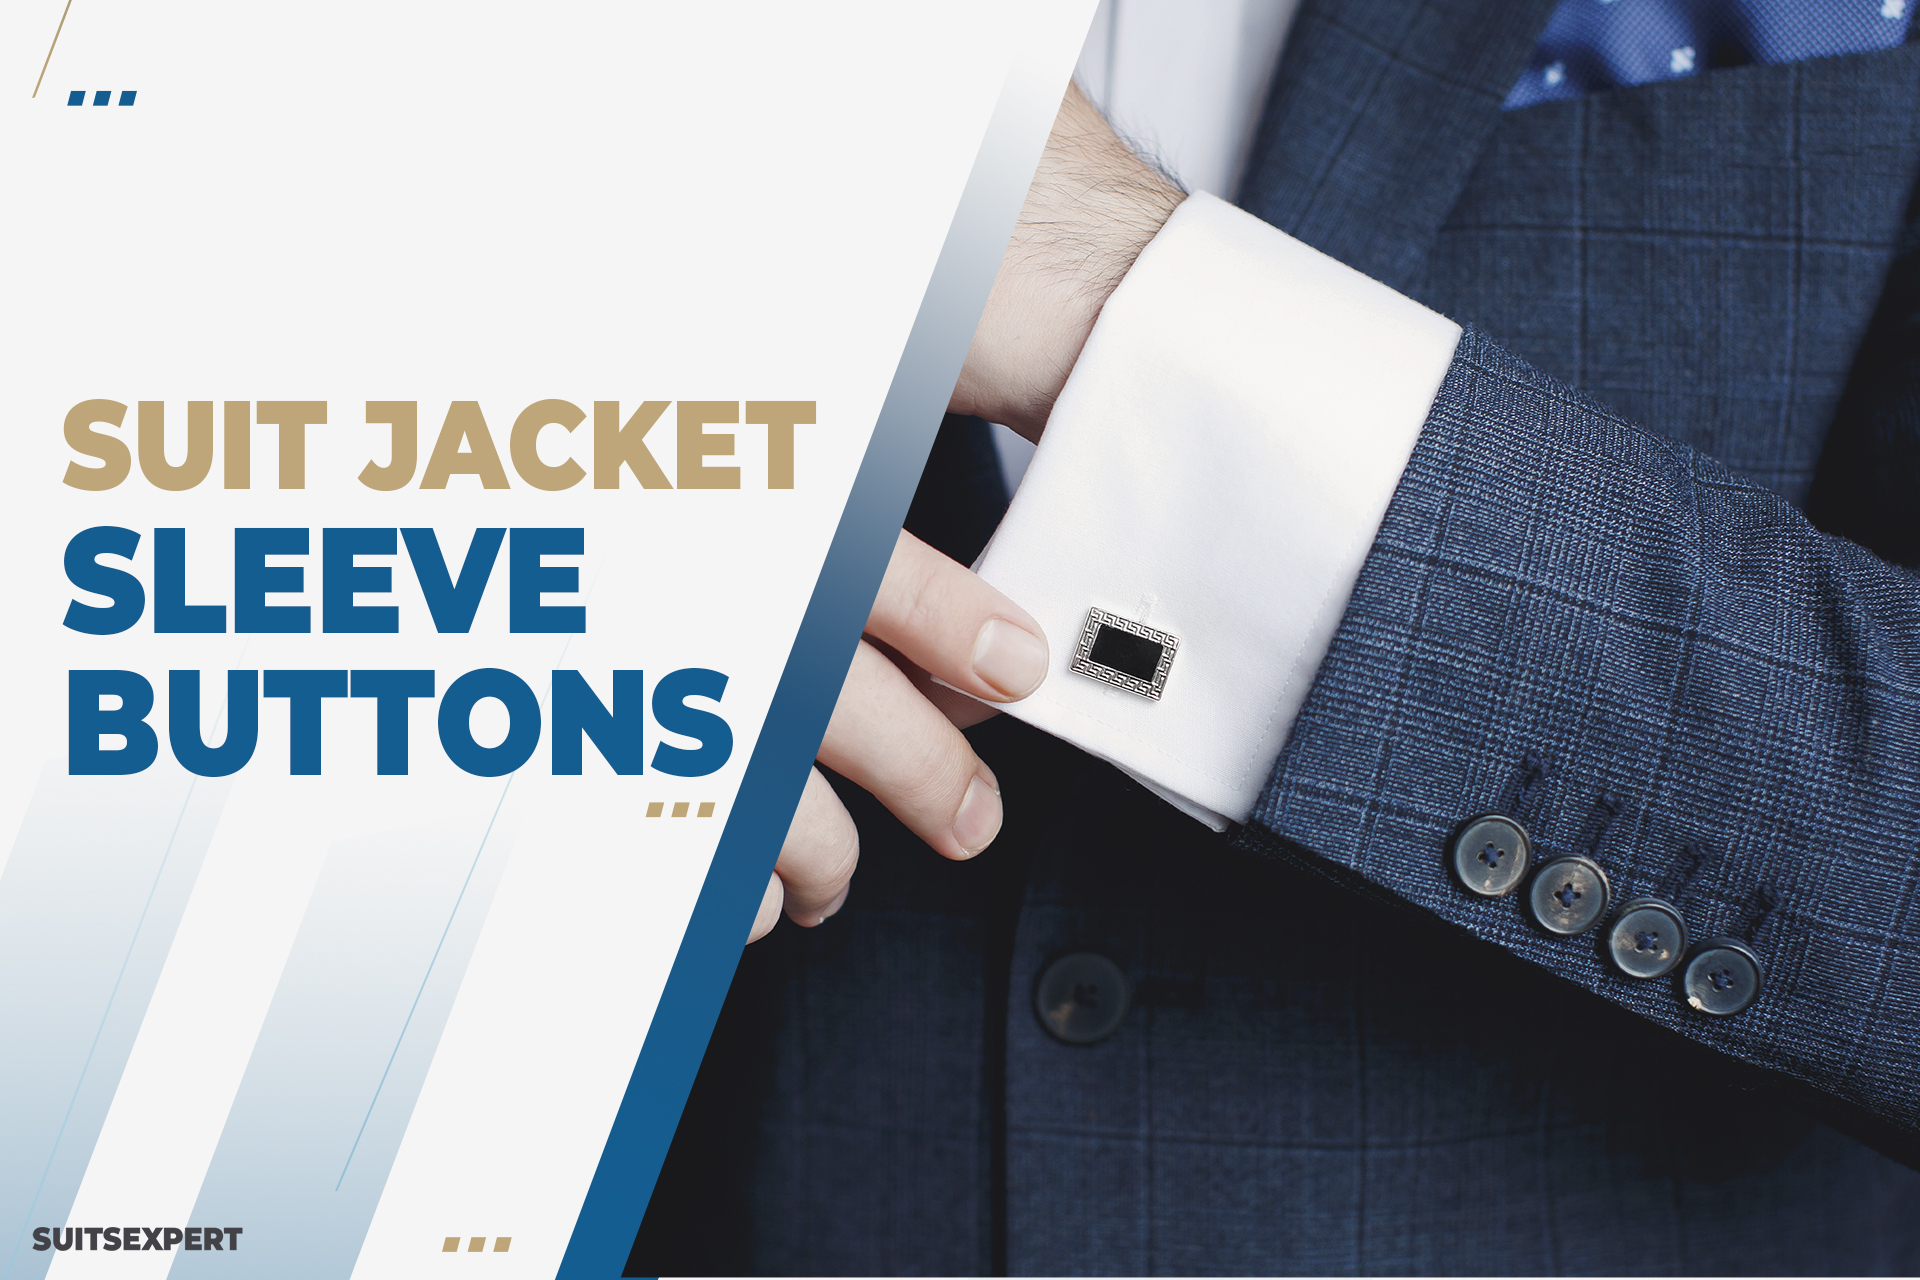 https://www.suitsexpert.com/wp-content/uploads/suit-jacket-sleeve-buttons-cover.jpg